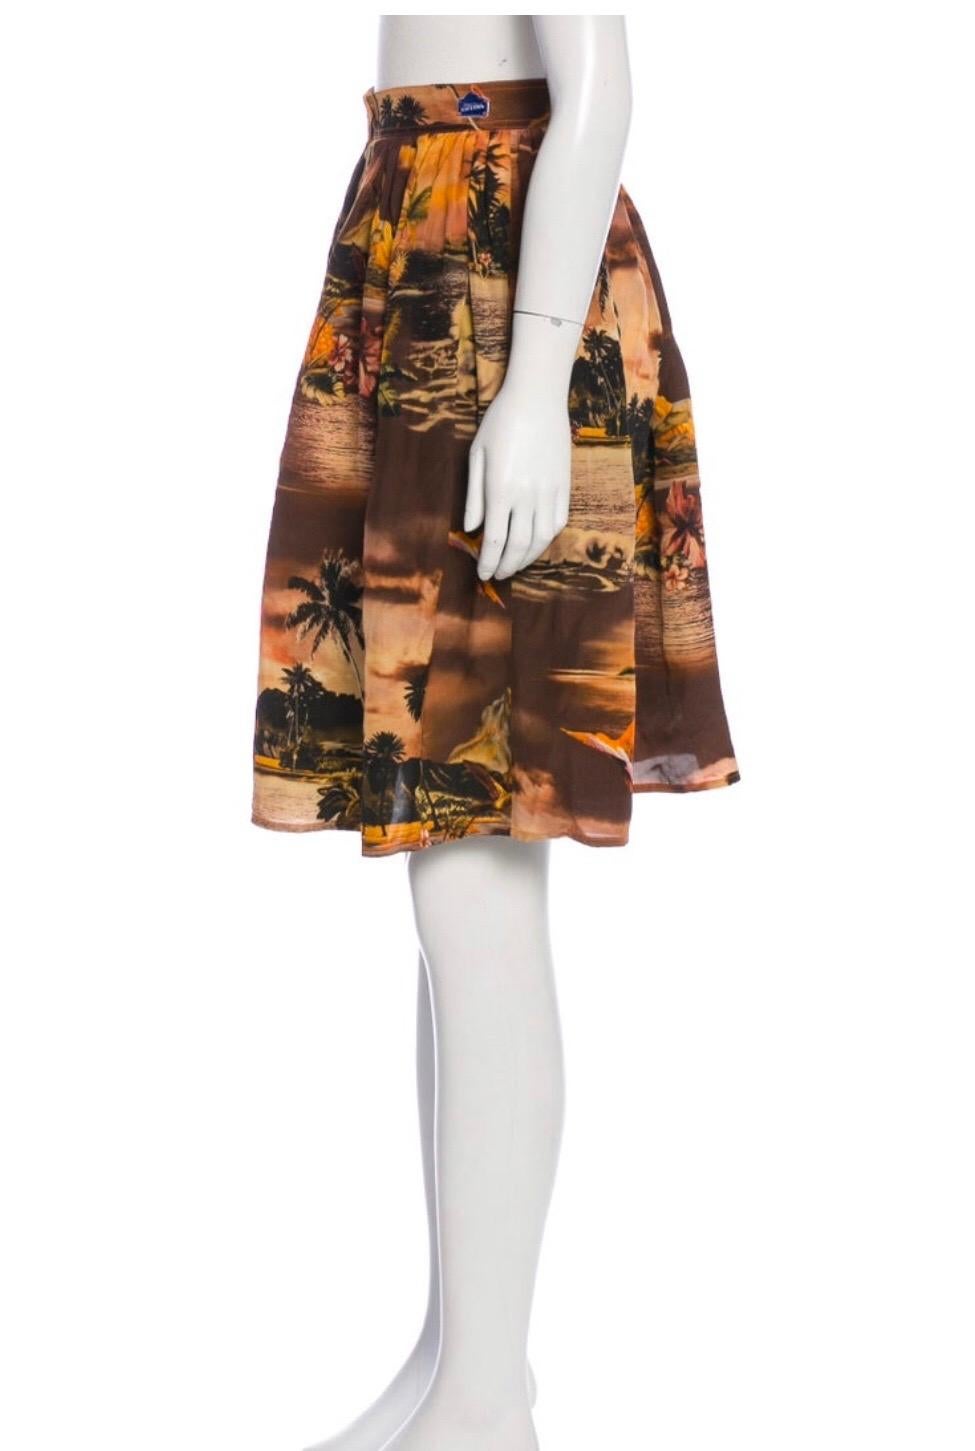 Jean Paul Gaultier island print mini skirt. Condition: Excellent. Size US 4, IR 40
Viscose fabric